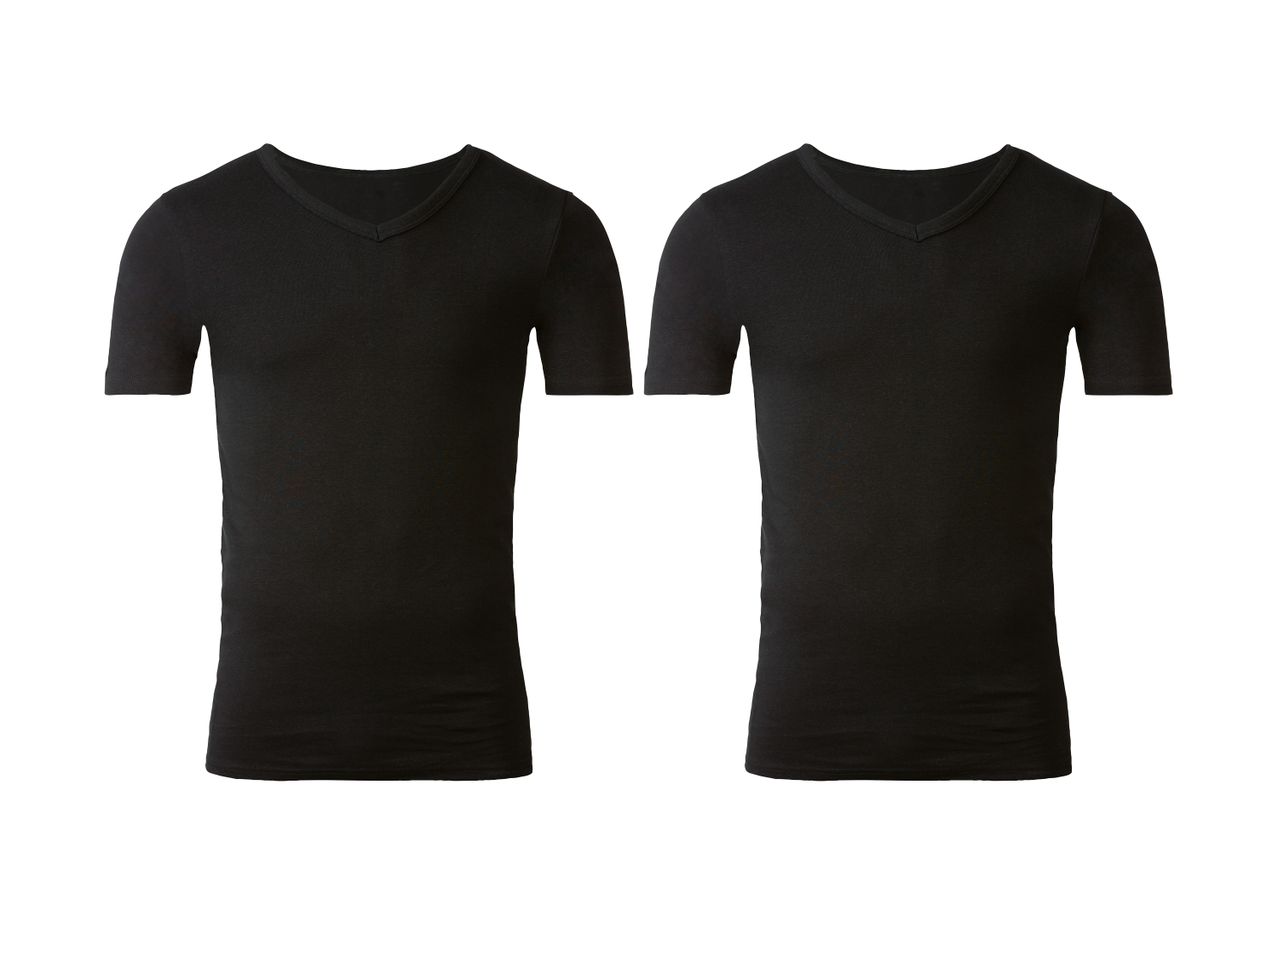 T-Shirt intima da uomo , prezzo 8.99 EUR 
T-Shirt intima da uomo 2 pezzi, Misure: ...